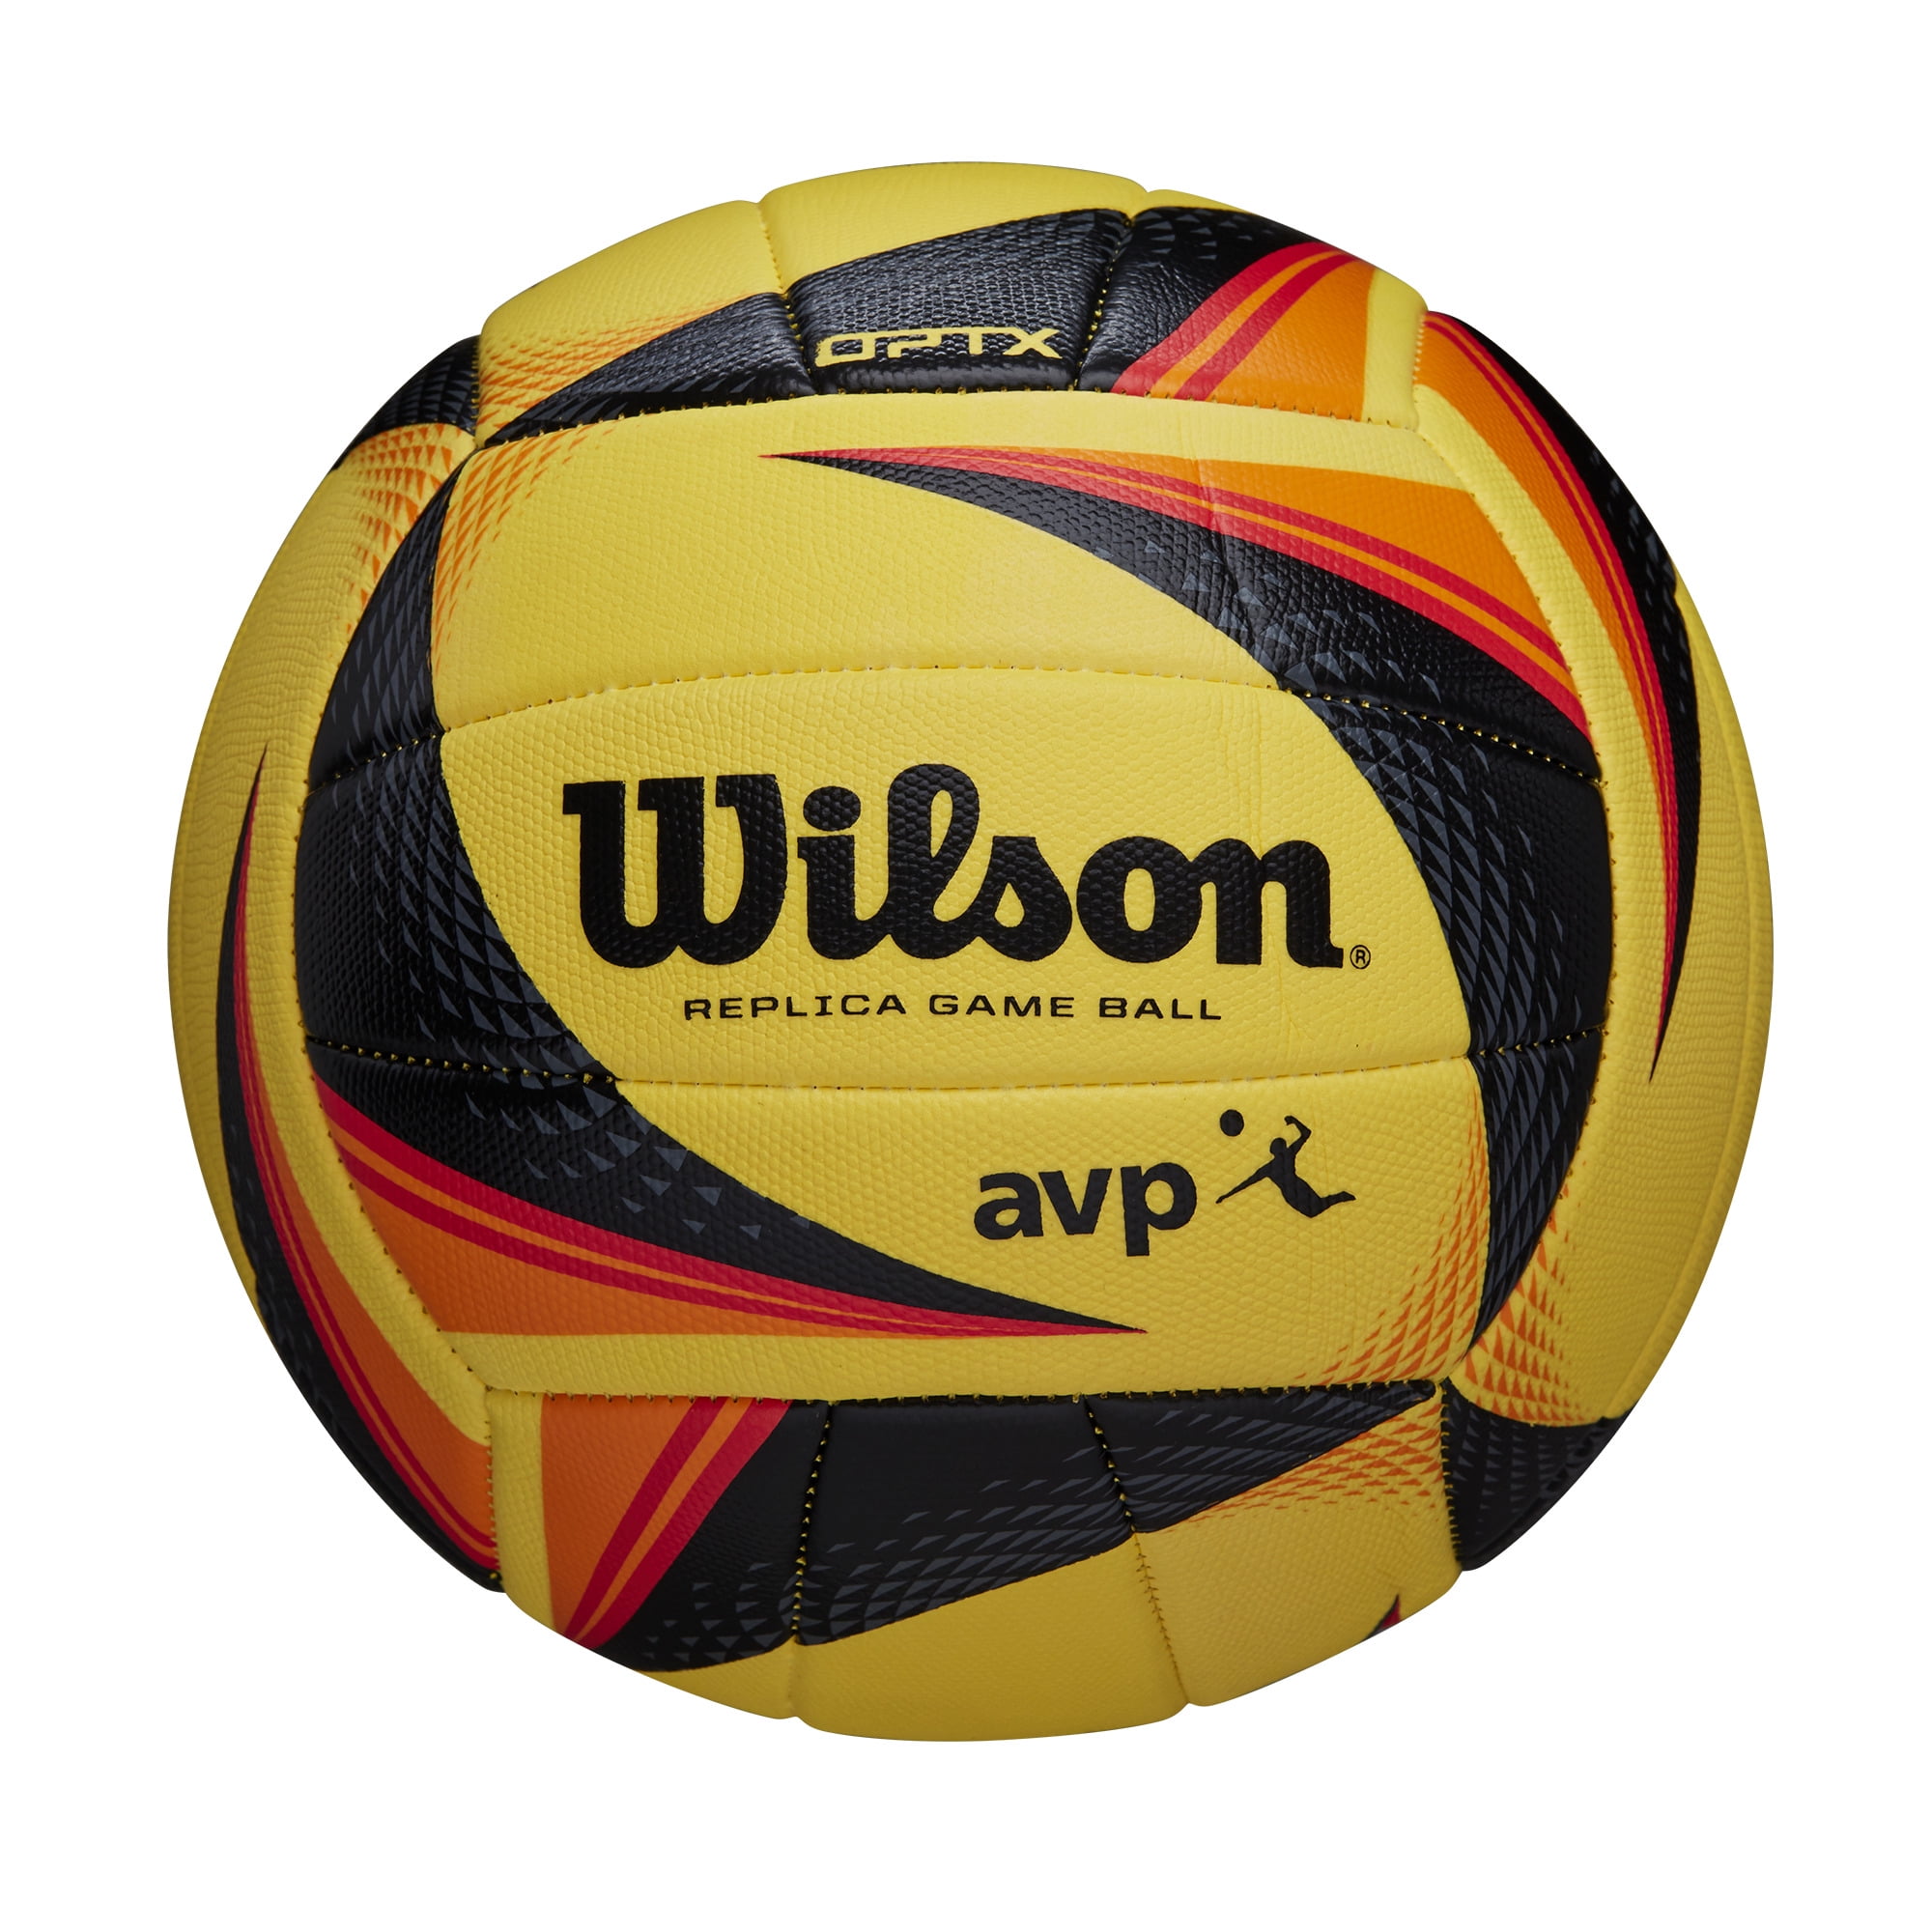 Weston Premium Recreational Beach Volleyball Official Size 